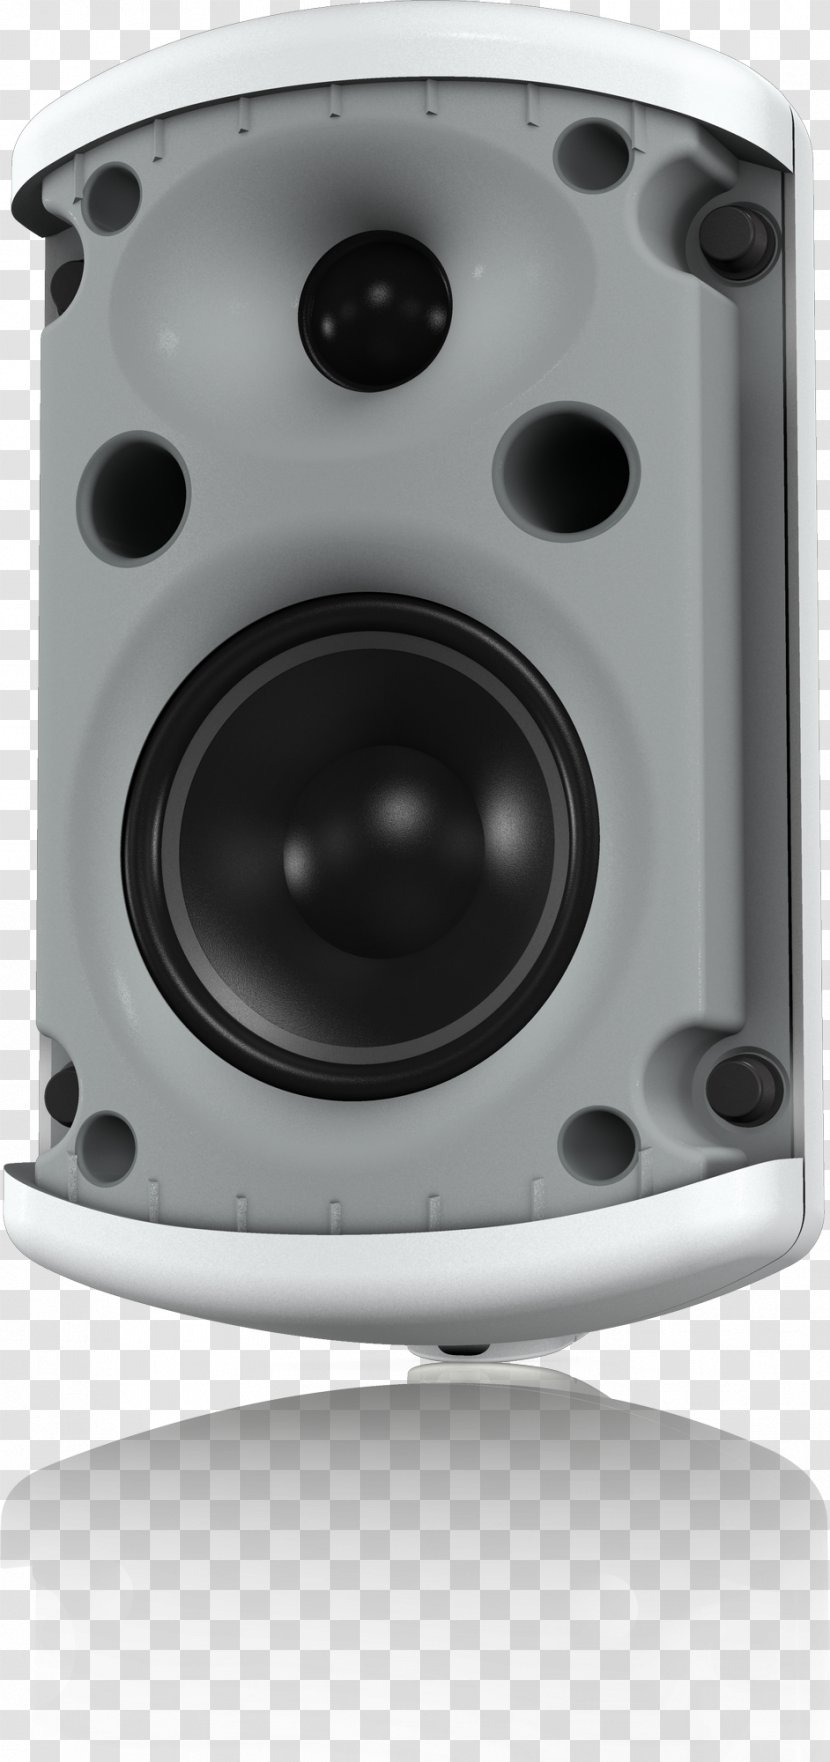 Computer Speakers Sound Subwoofer Loudspeaker Full-range Speaker - Studio Monitor - Turbosound Inspire Ip2000 Transparent PNG